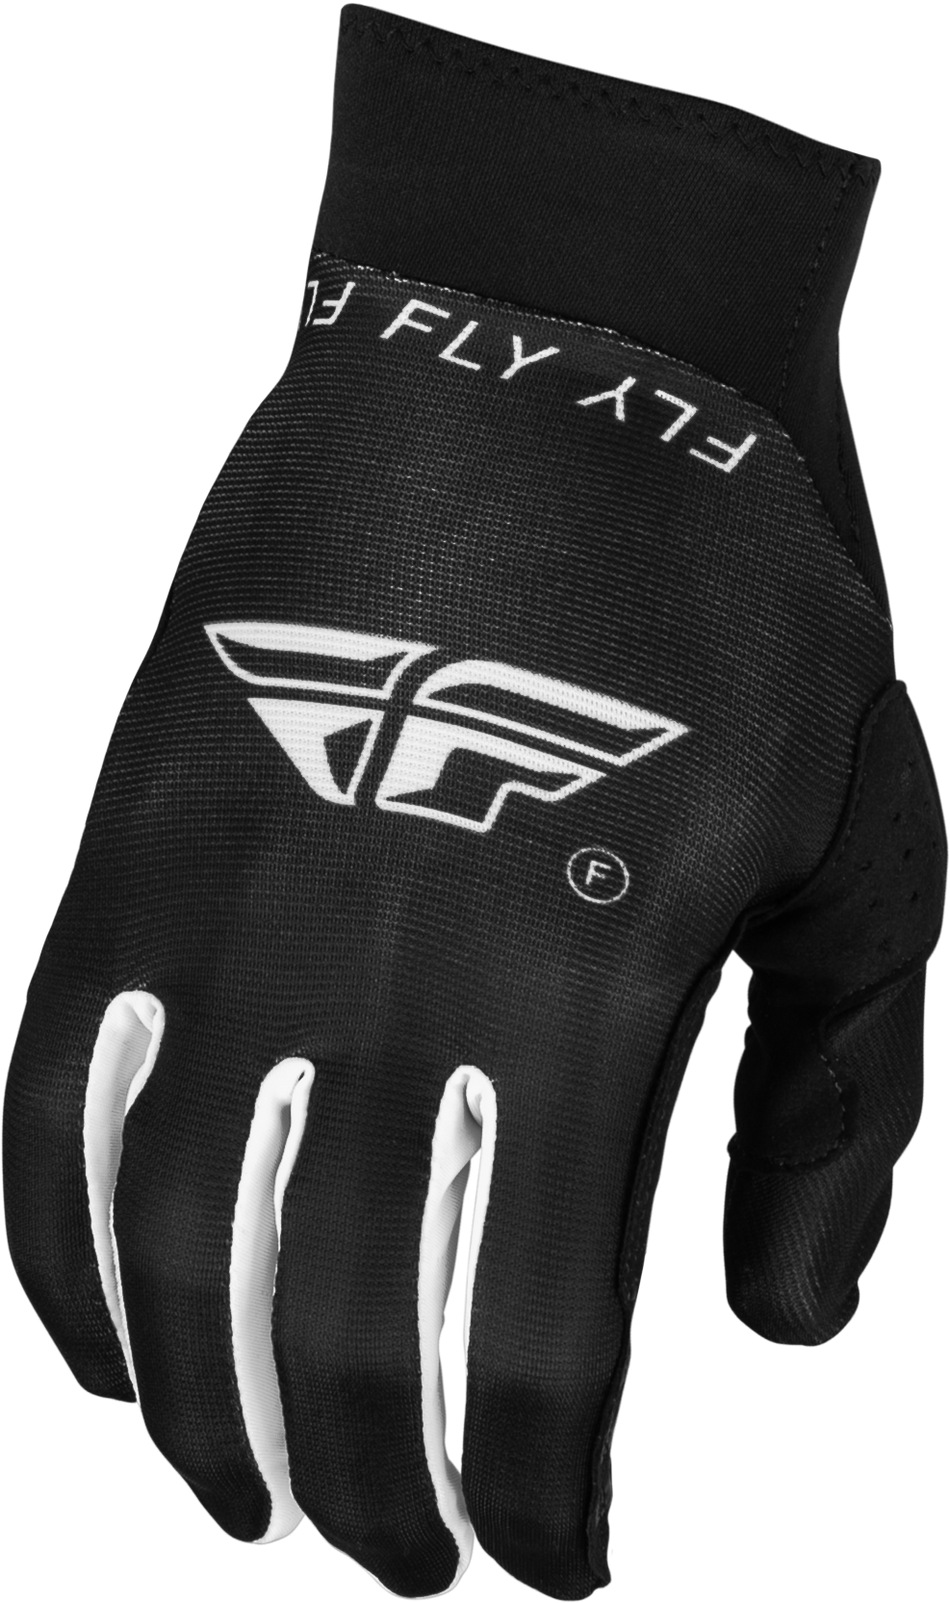 FLY RACING Pro Lite Gloves Black/White Md 377-040M